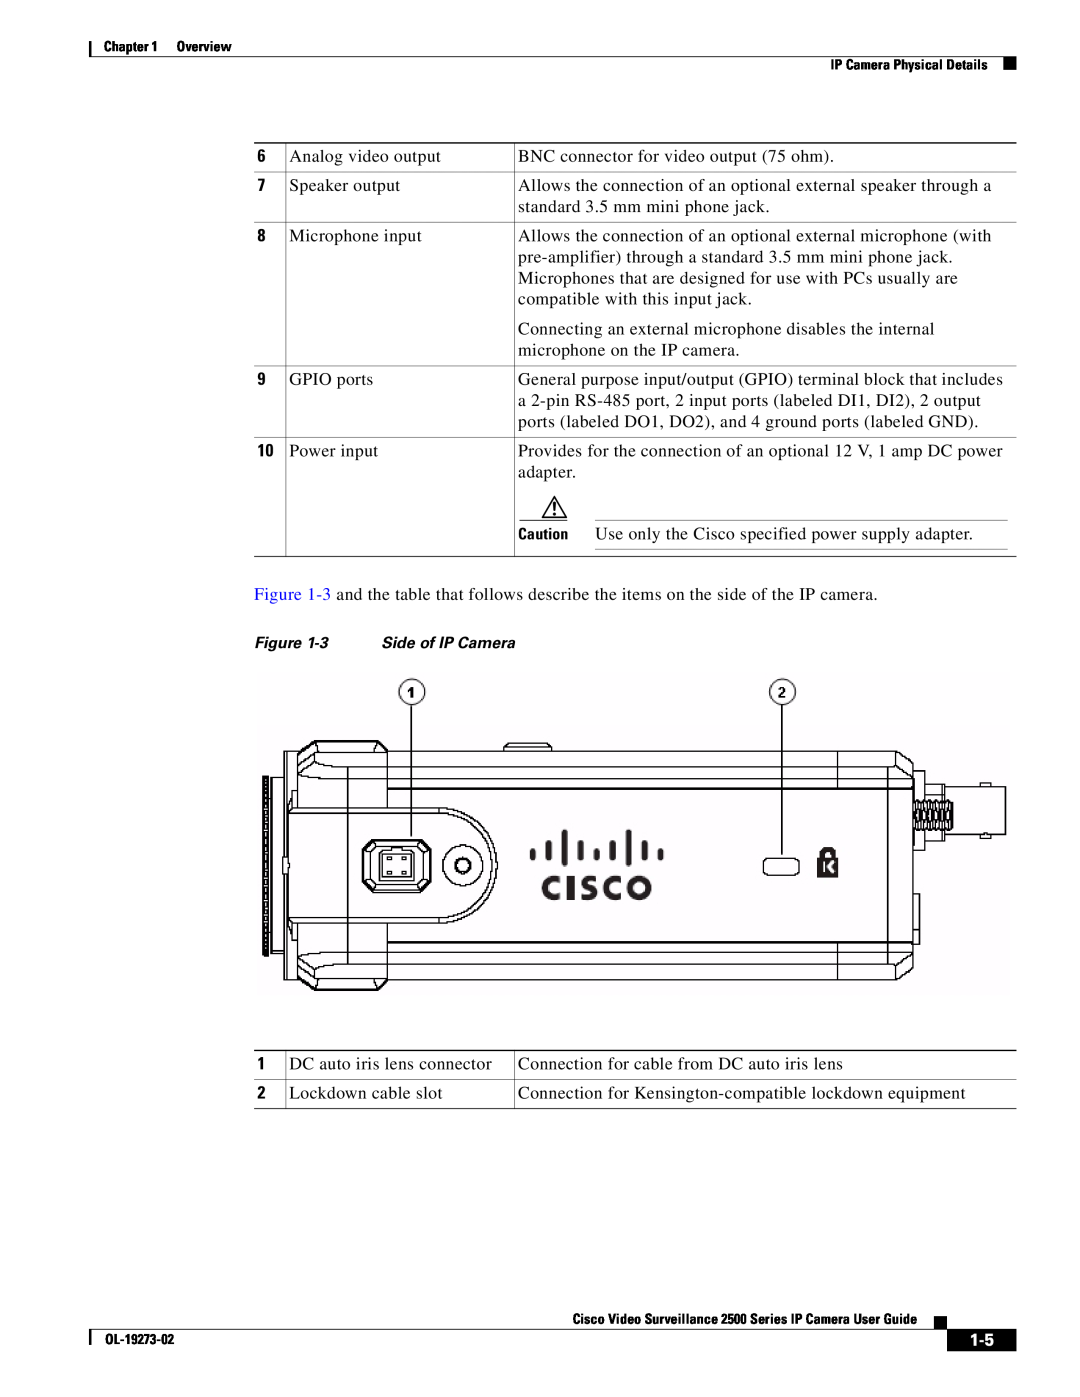 Cisco Systems CIVS-IPC-2500, 2500 Series manual Analog video output 